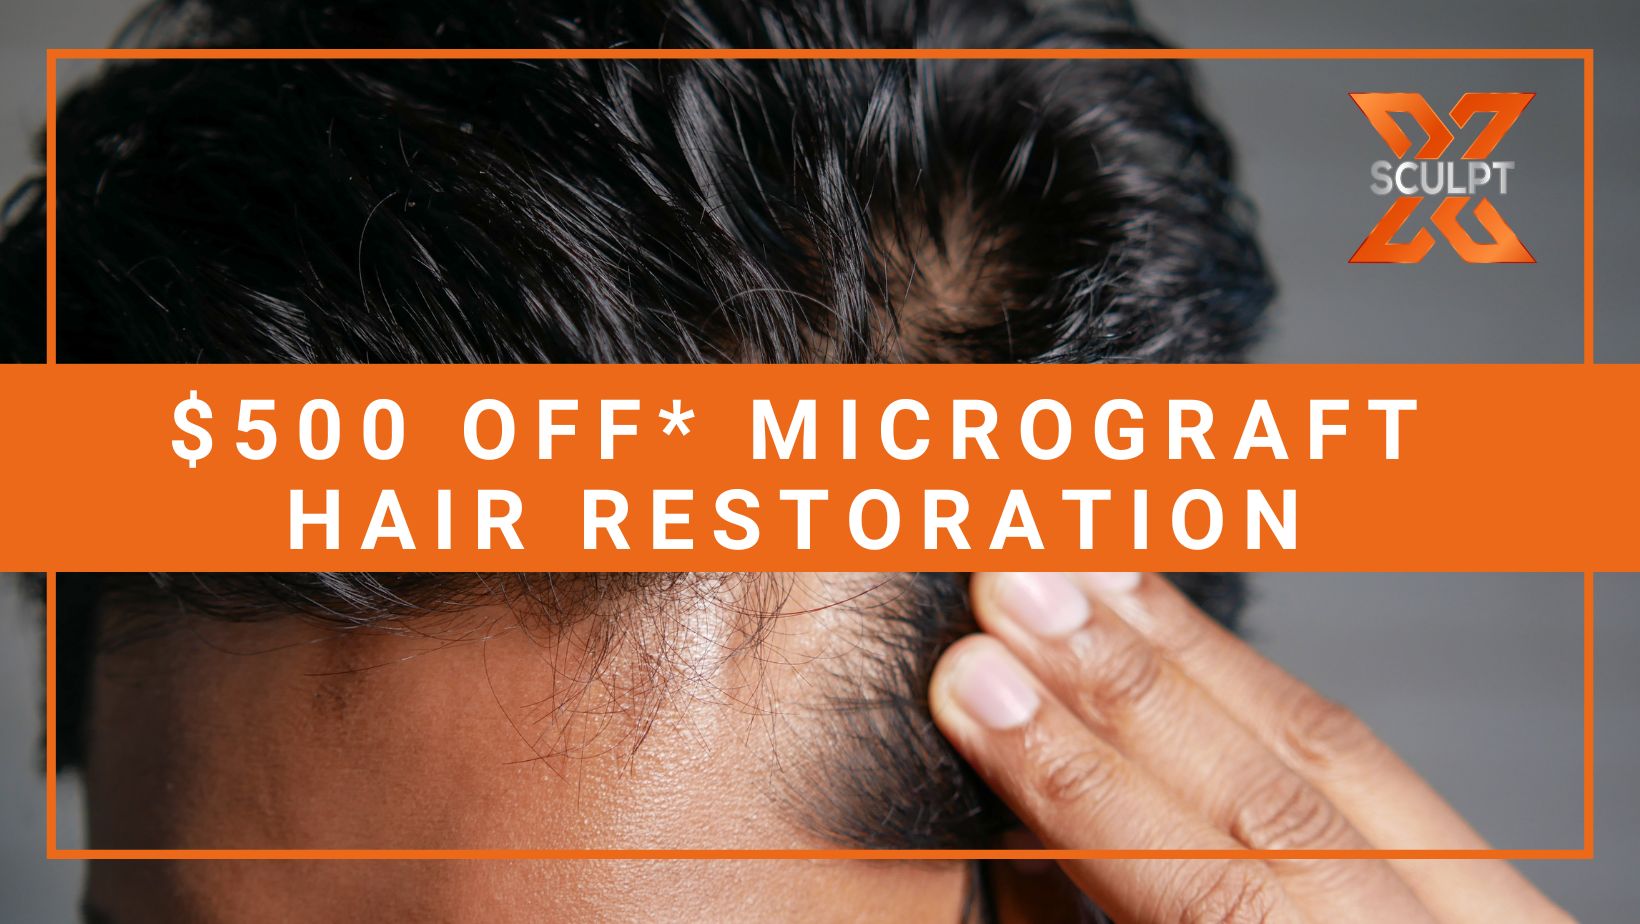 Xsculpt Specials: $500 off microcraft hair restoration.